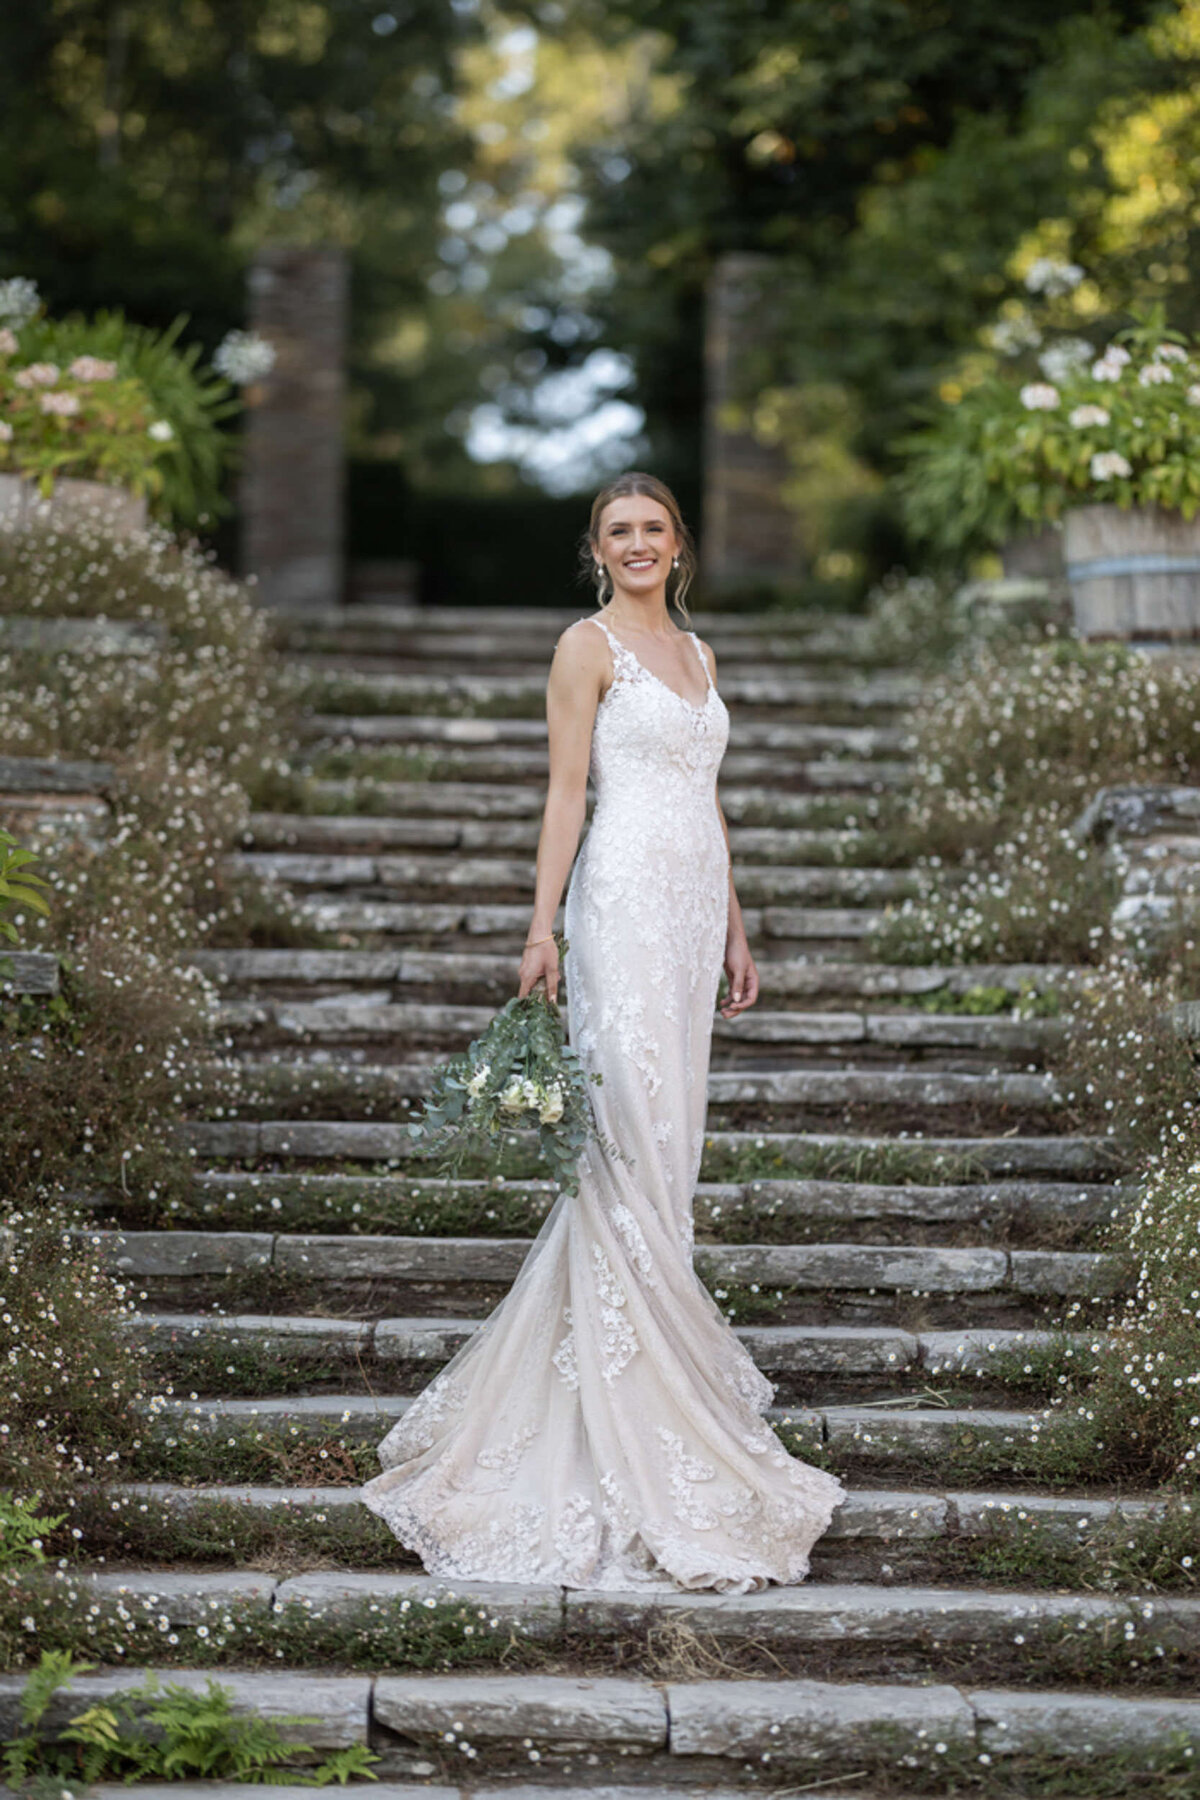 Bride on daisy steps at Hestercombe House Wedding venue